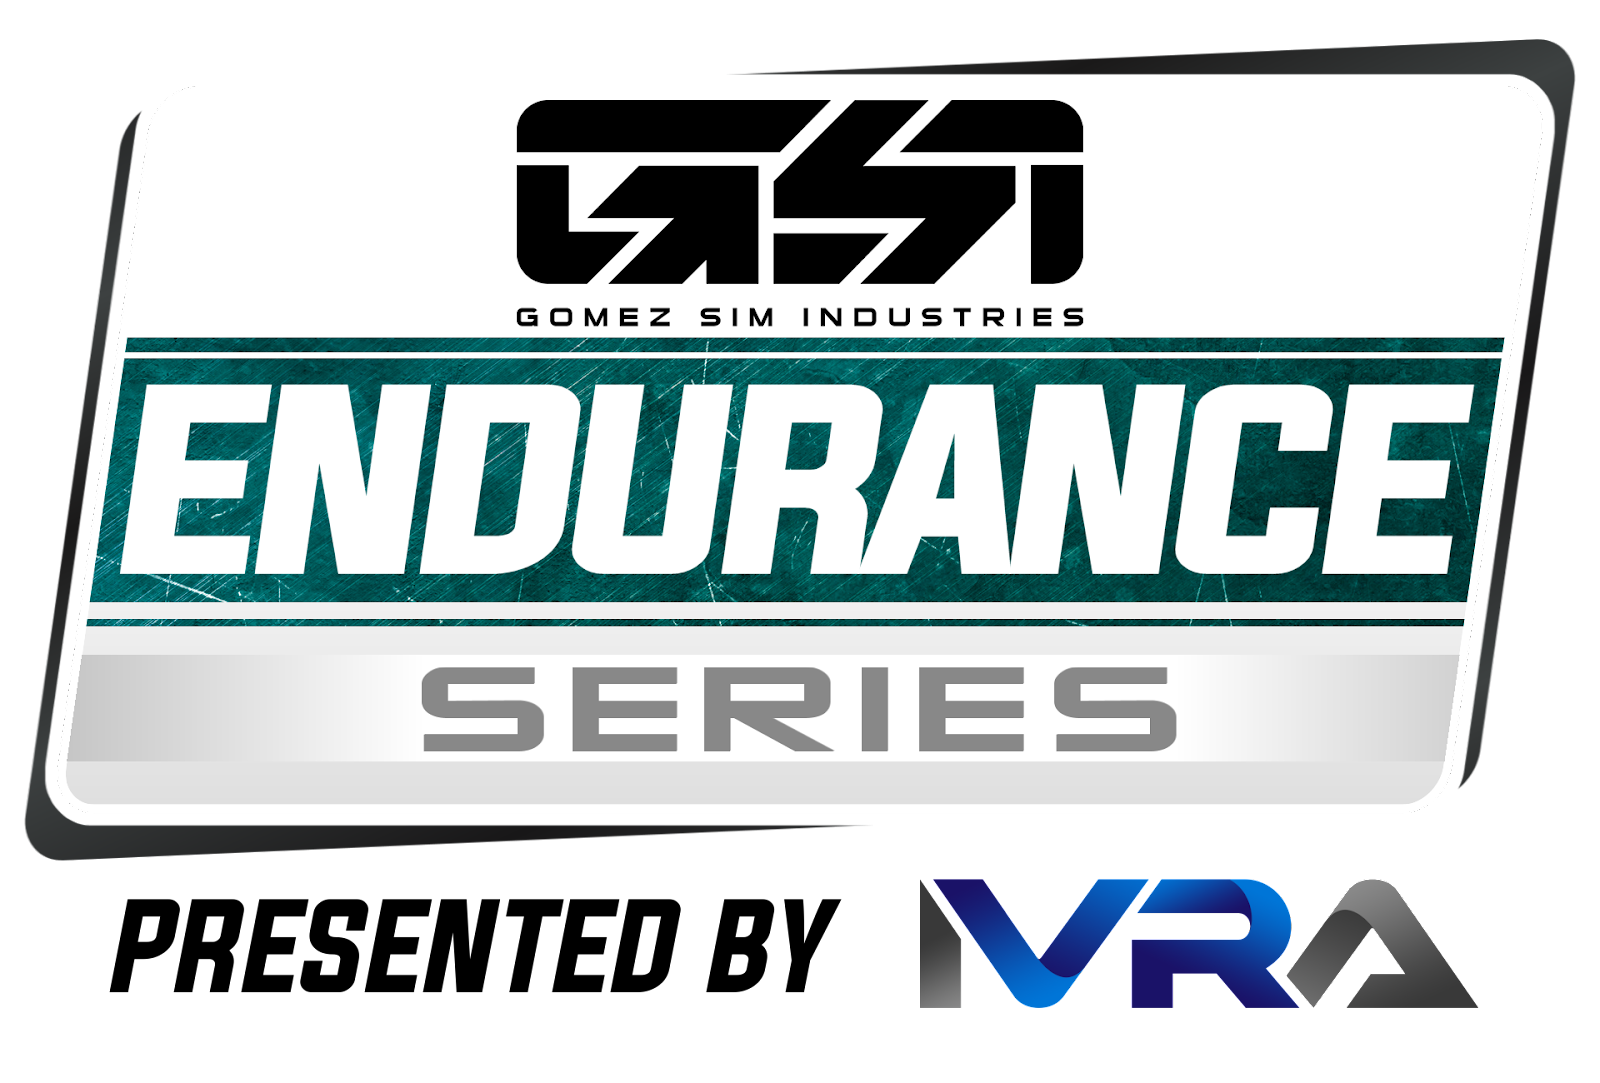 GSI Endurance Series powered by IVRA Logo